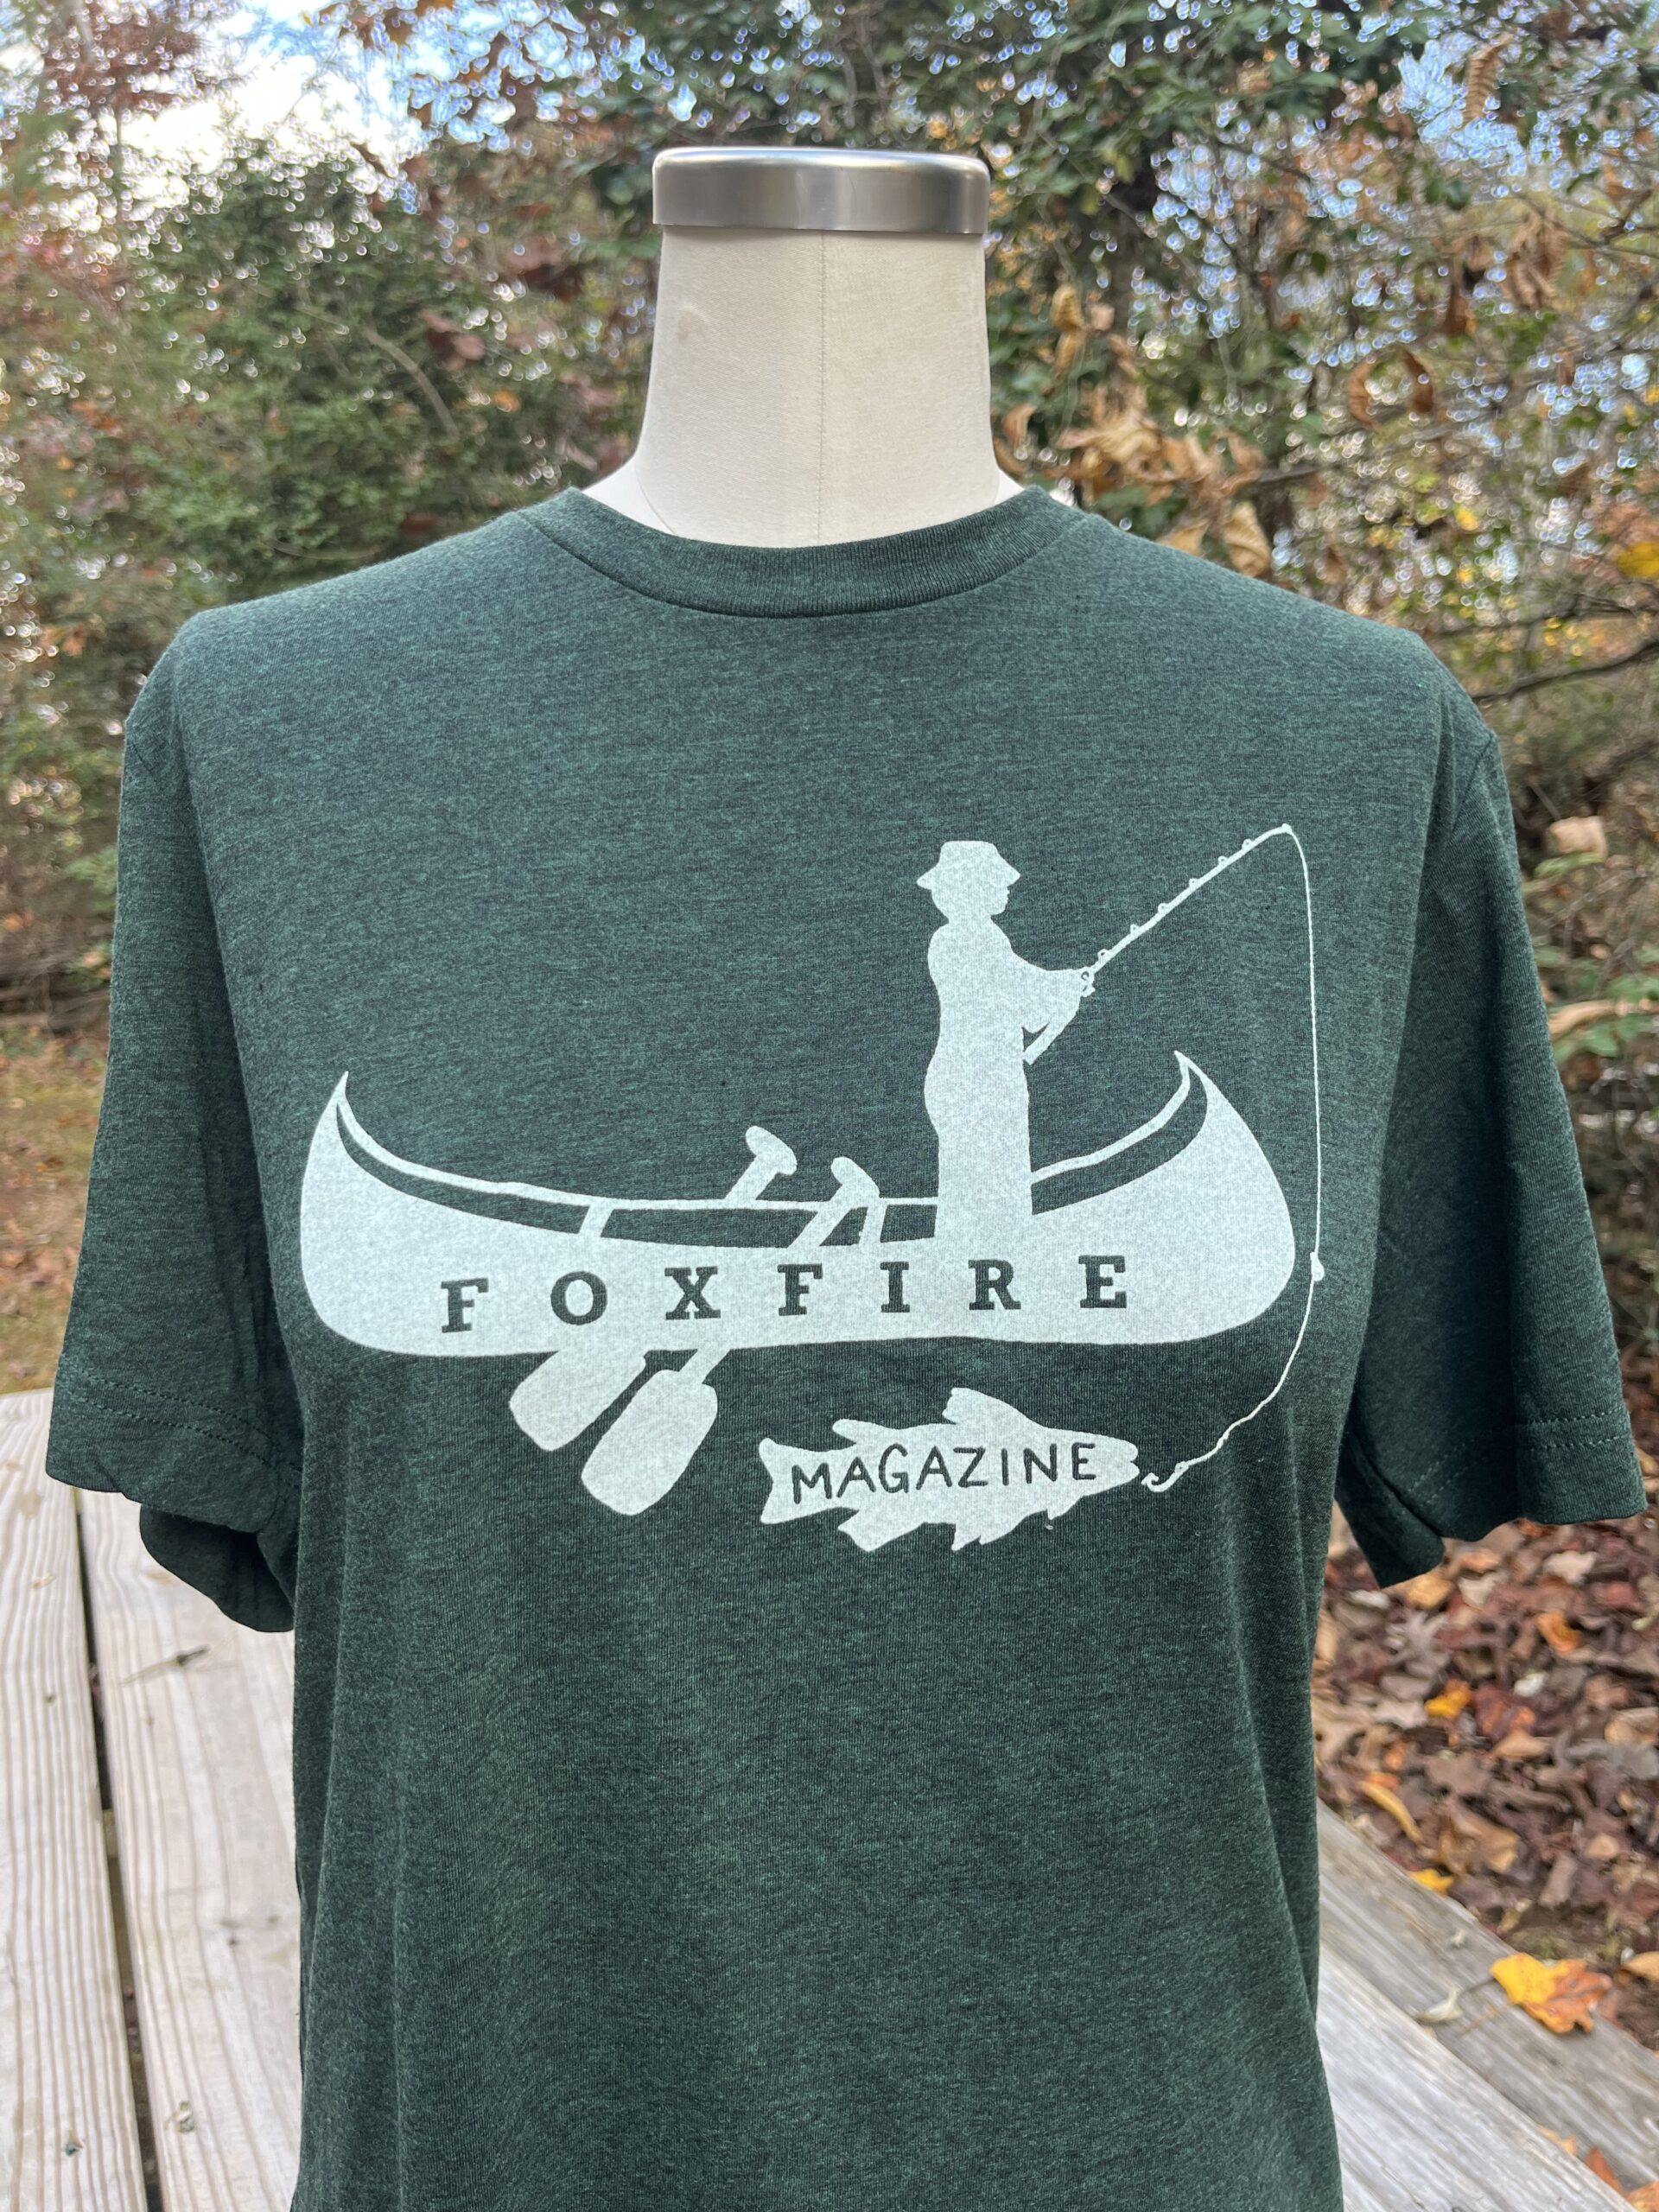 Fishing on Hebgen Lake T-Shirt by Carolyn Fox - Pixels